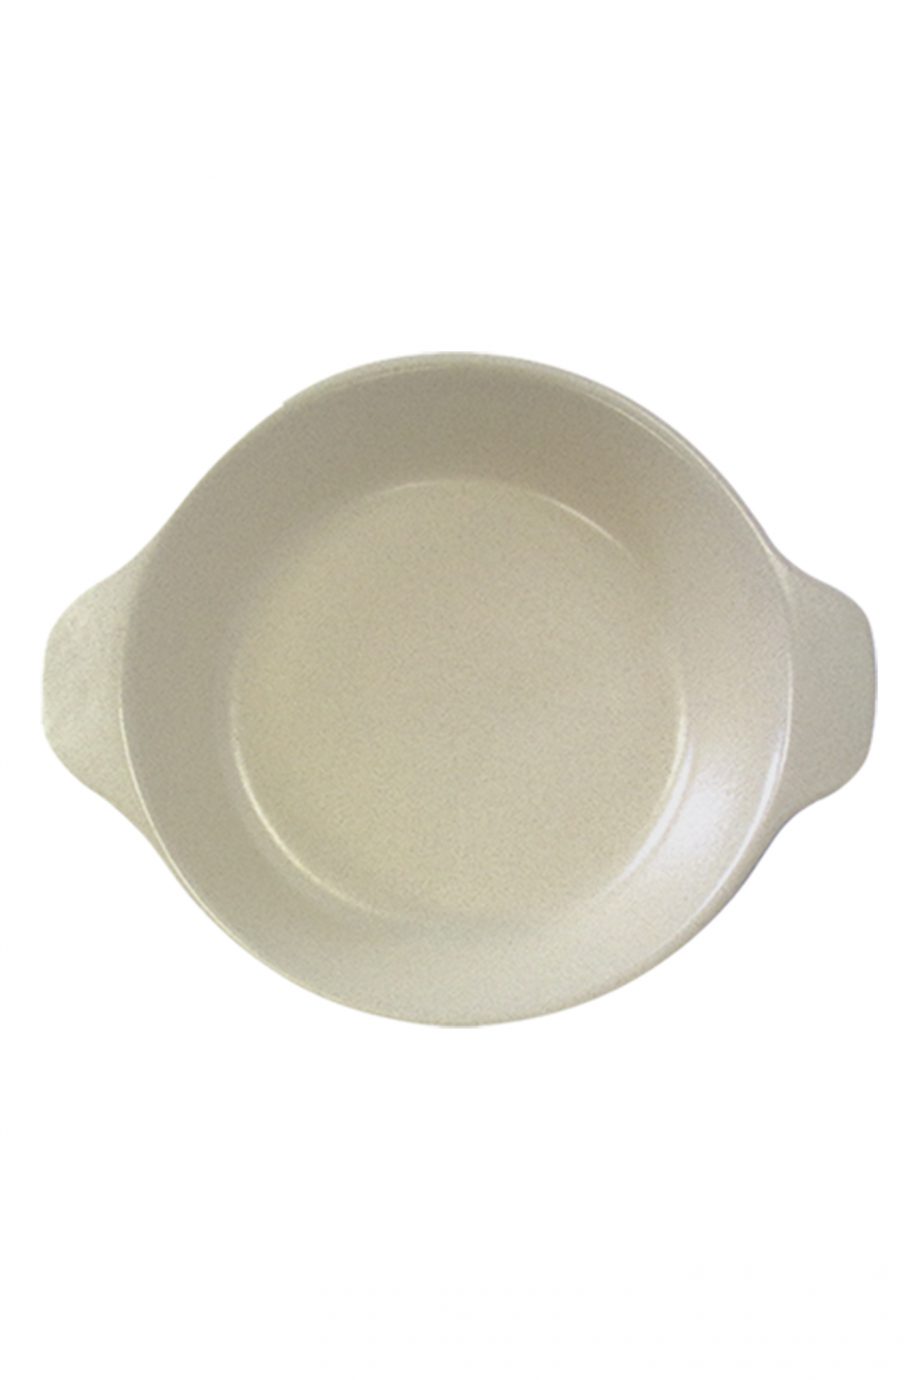 oven bord melk wit glaze ceramic large